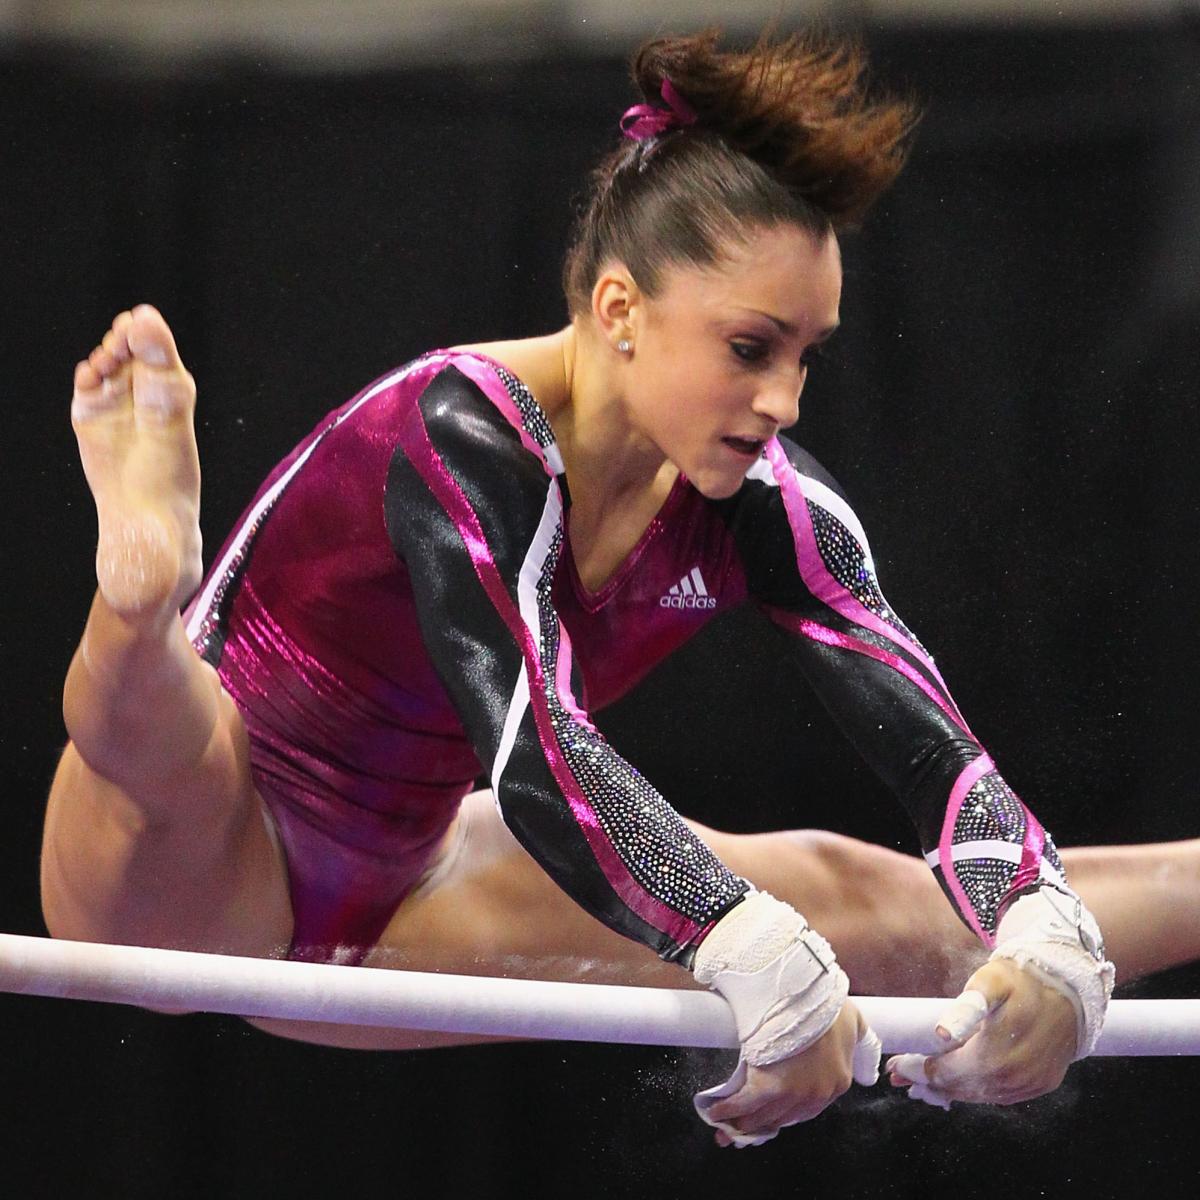 US Olympic Trials Gymnastics Schedule 2012 Dates, Events, Live Stream